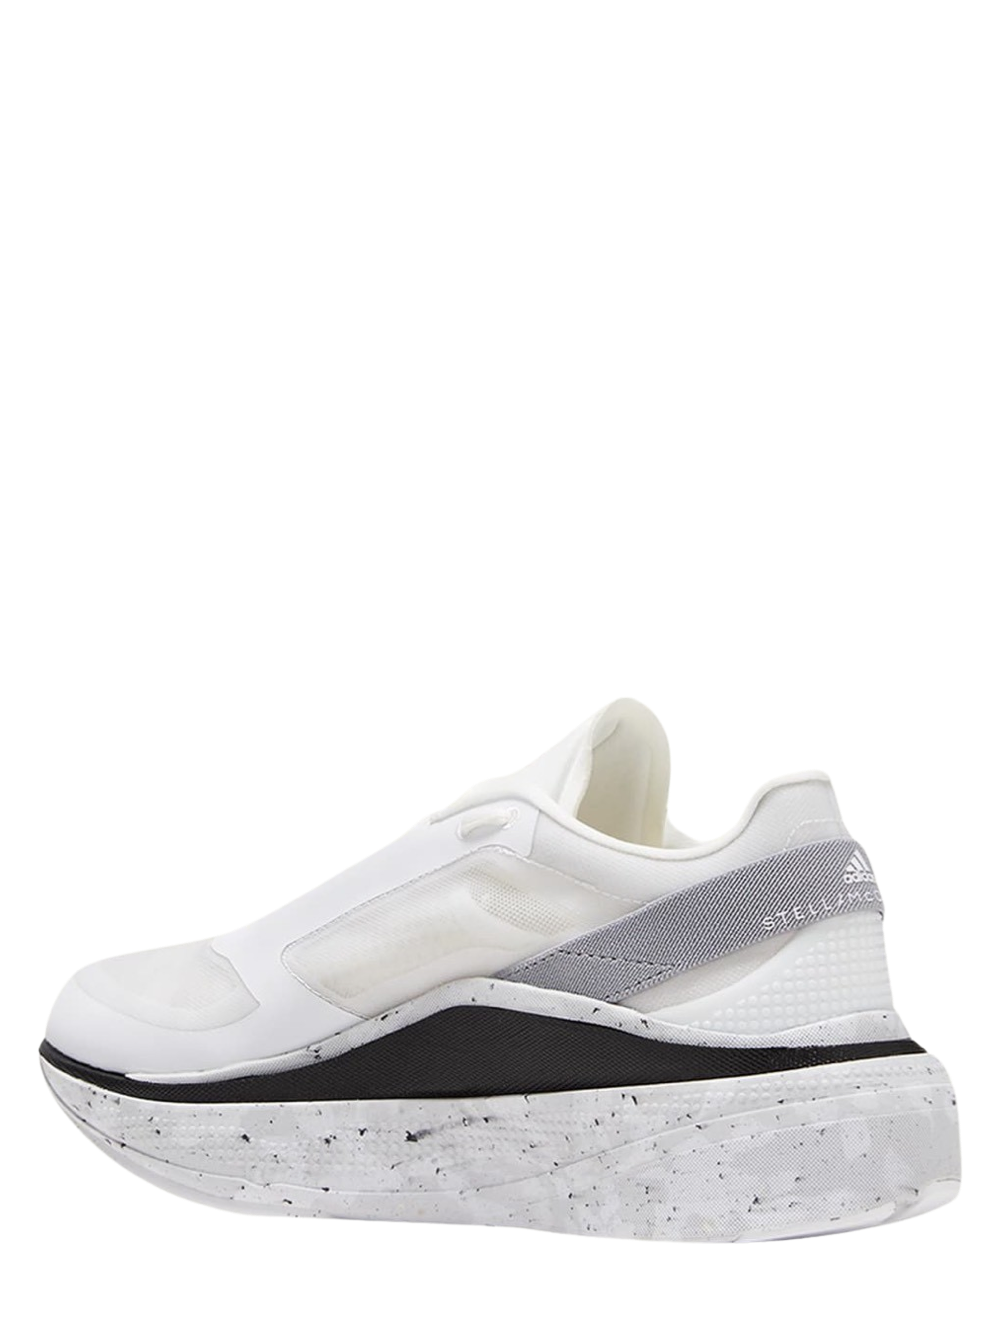 Adidas x Stella McCartney Earthlight Sneaker in White/Dove Gray